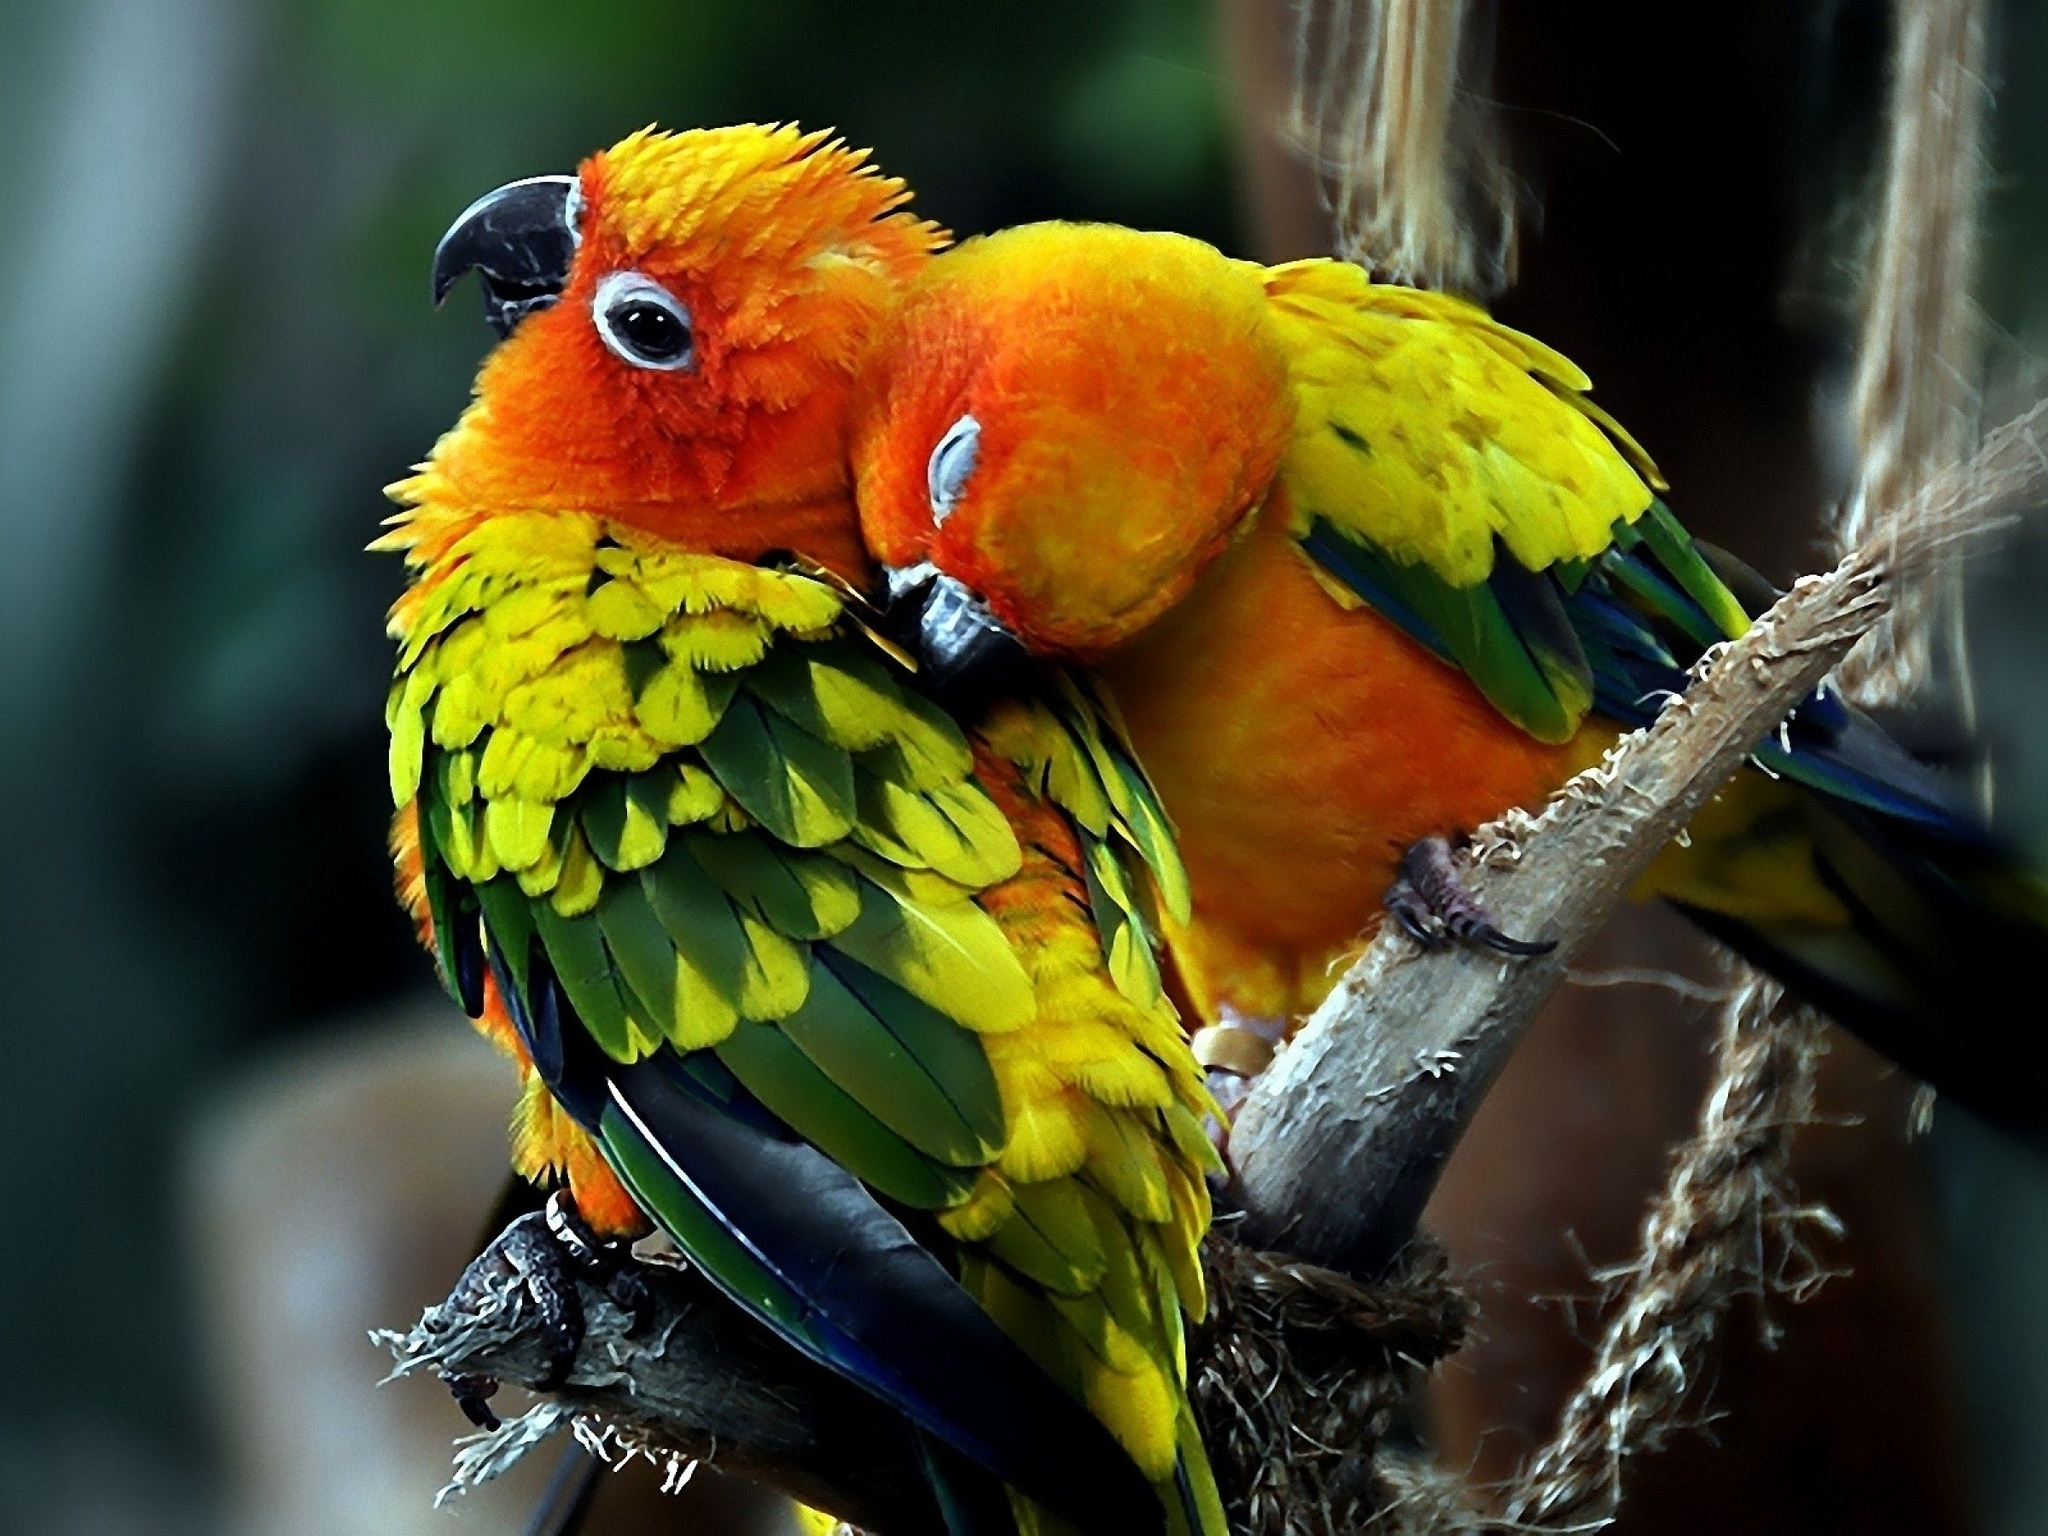 Image: Parrots, birds, beak, eyes, feathers, couple, love